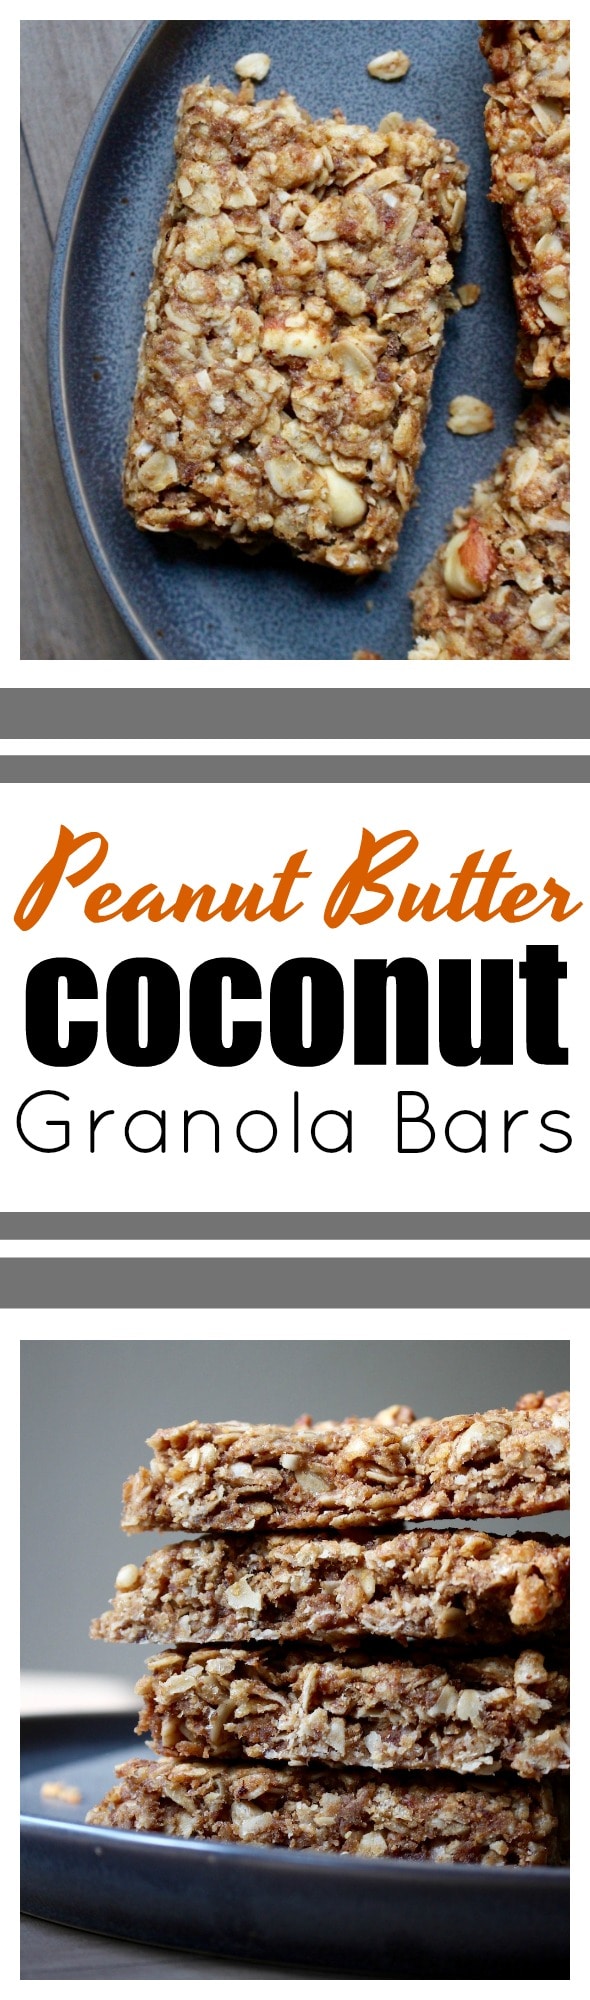 Peanut Butter Coconut Granola Bars title display